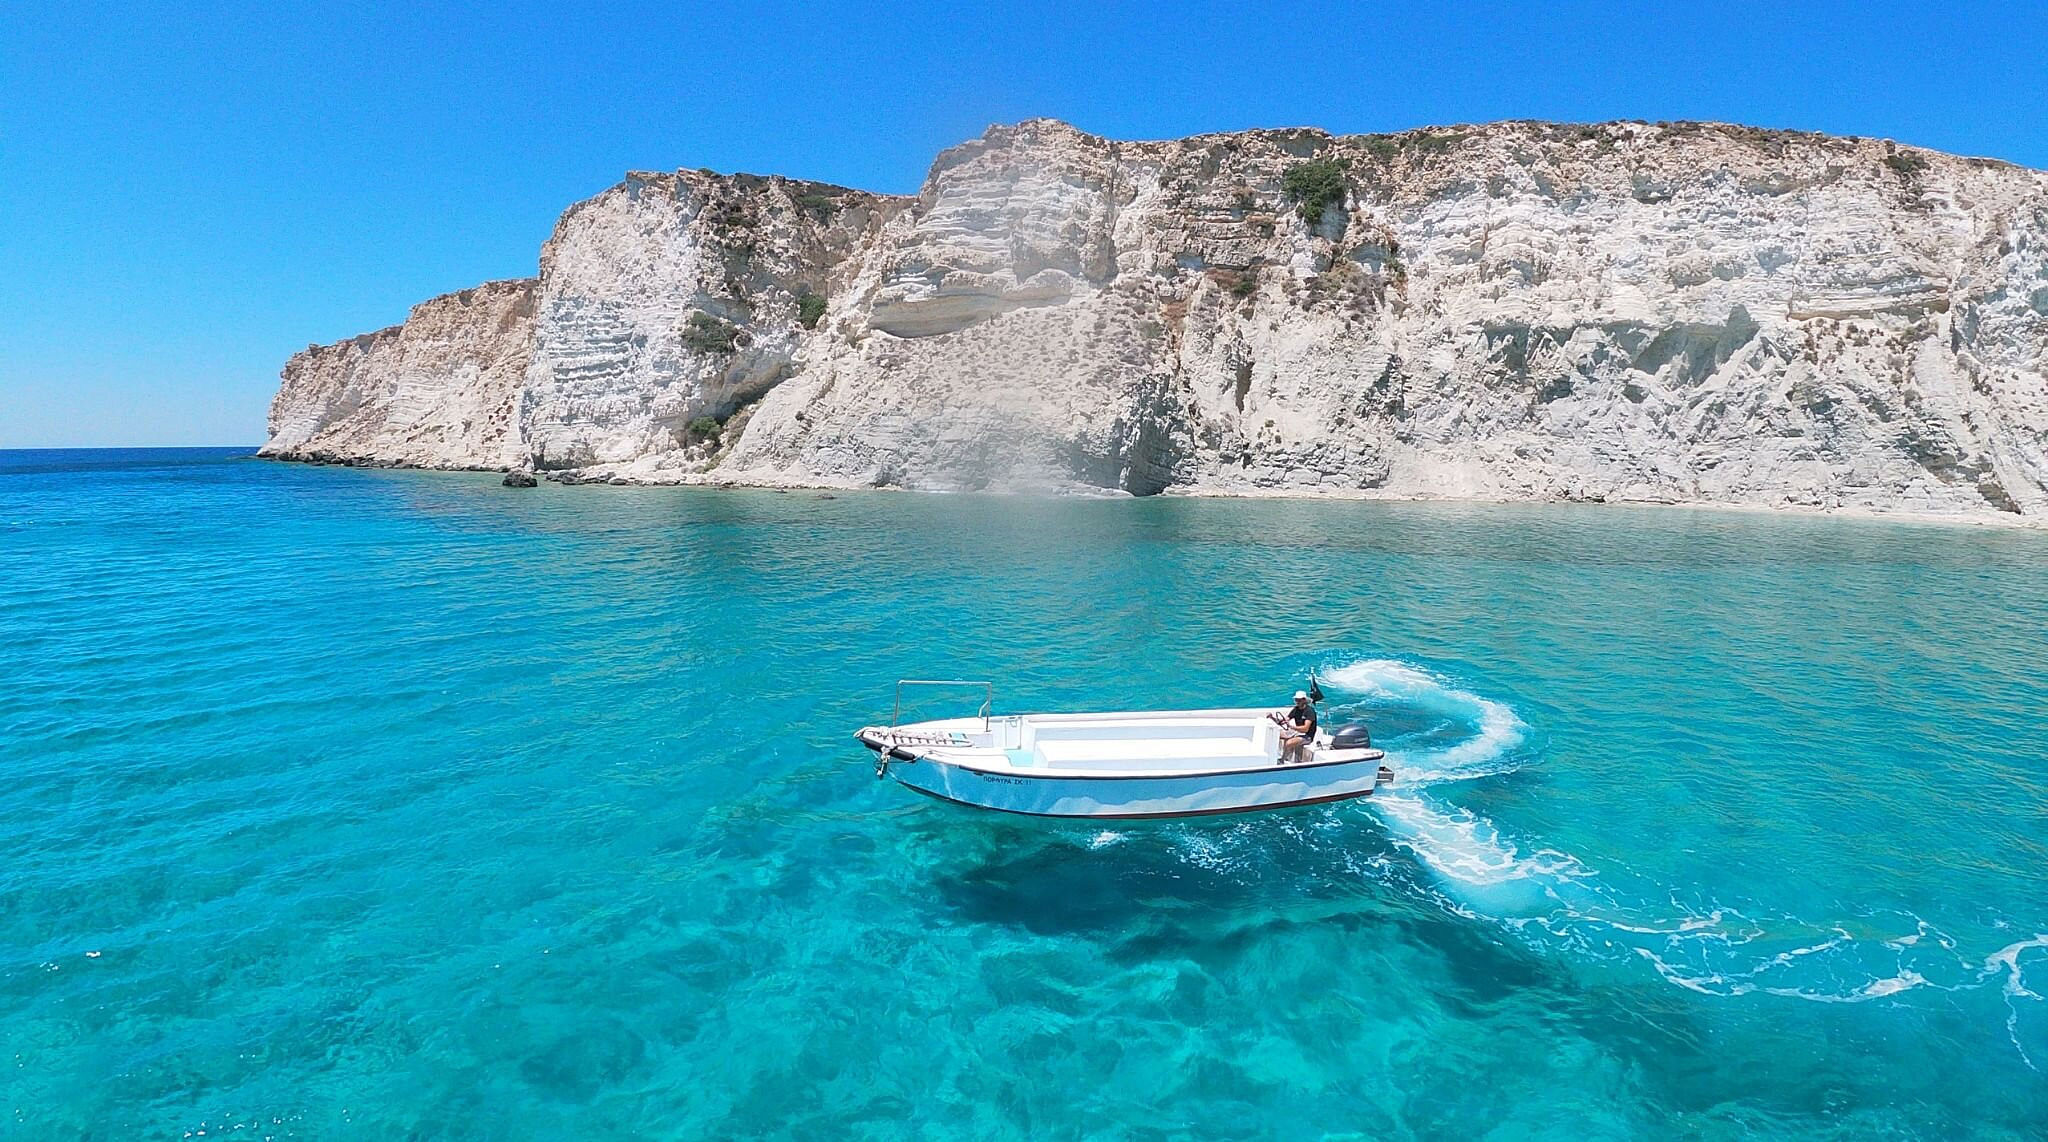 Crete Island, Greece